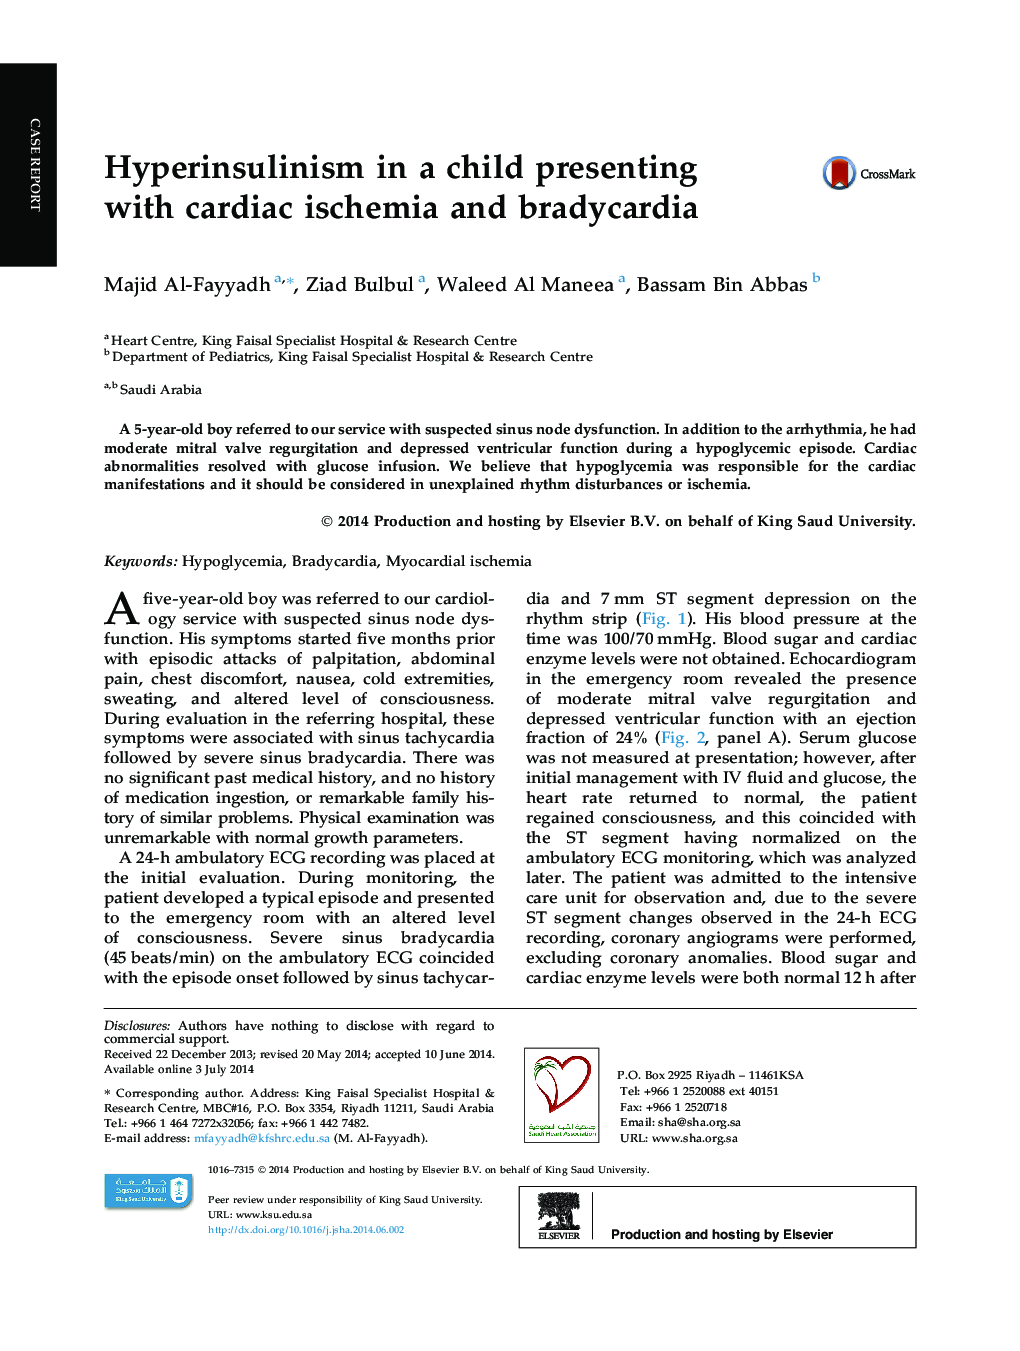 Hyperinsulinism in a child presenting with cardiac ischemia and bradycardia 